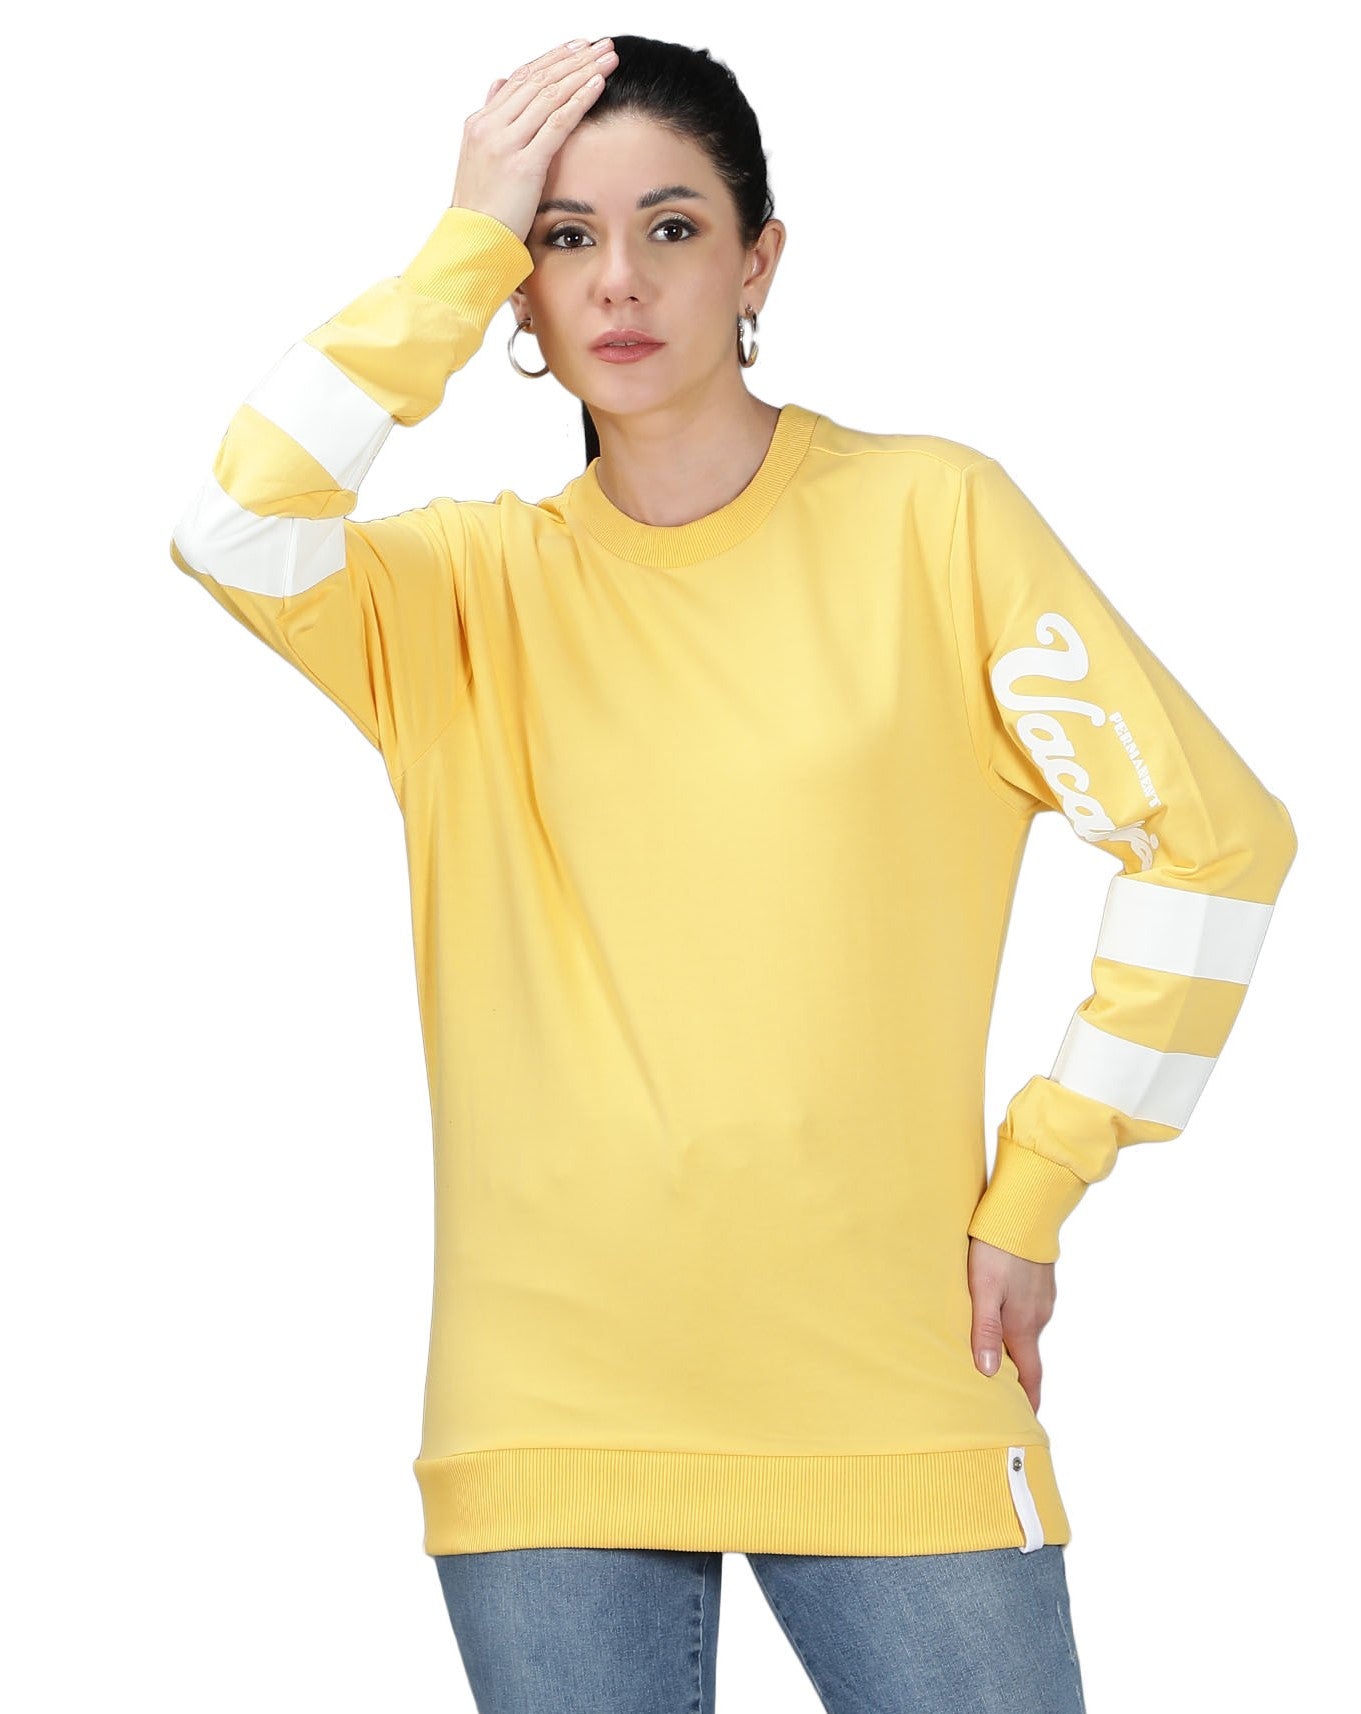 NUEVOSDAMAS Stripes Printed Yellow Sweatshirt